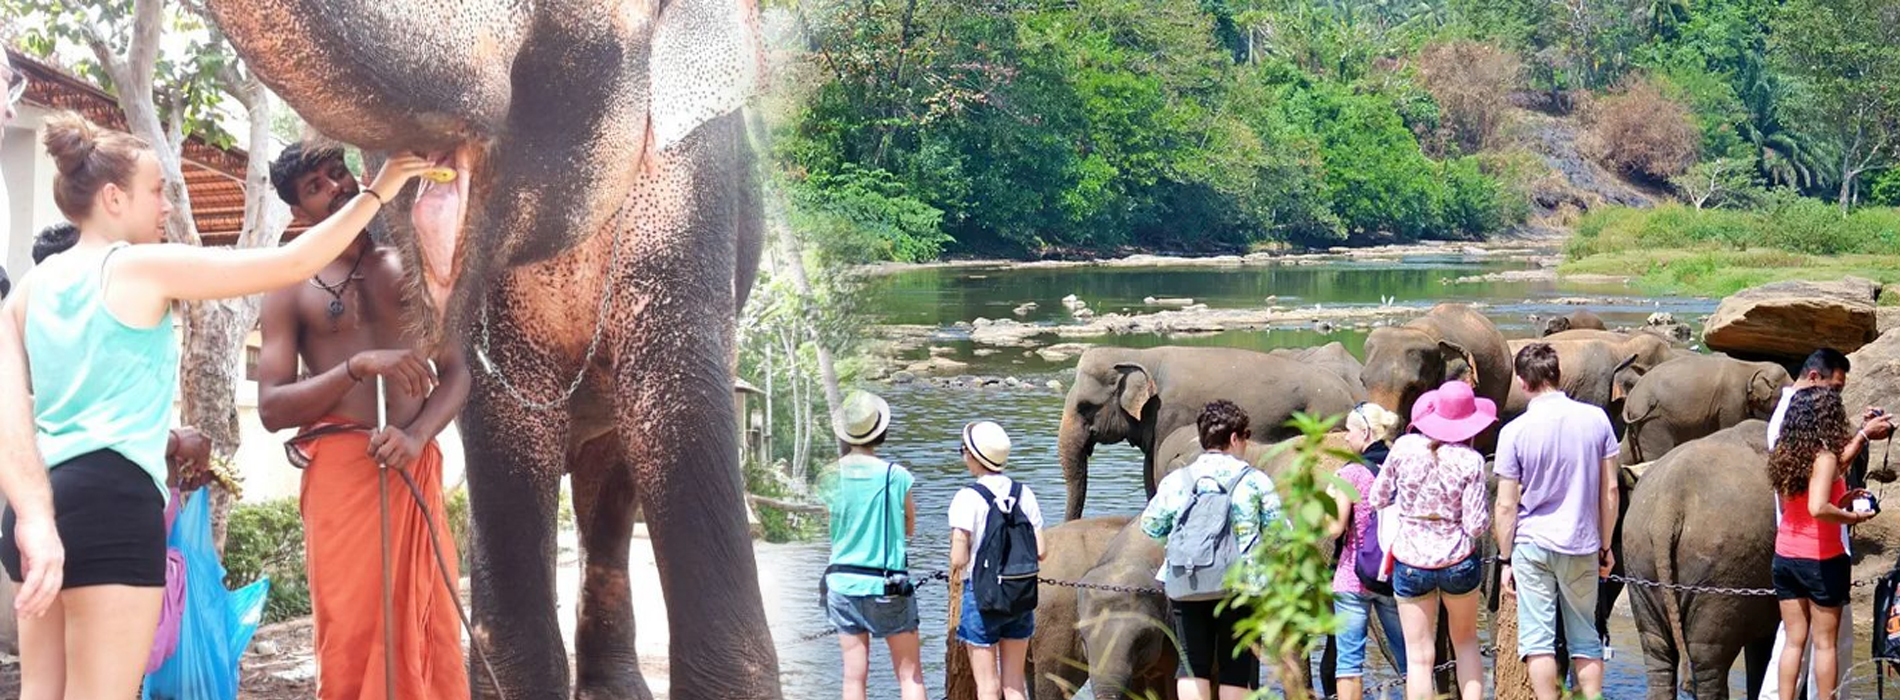 Visiting Elephants